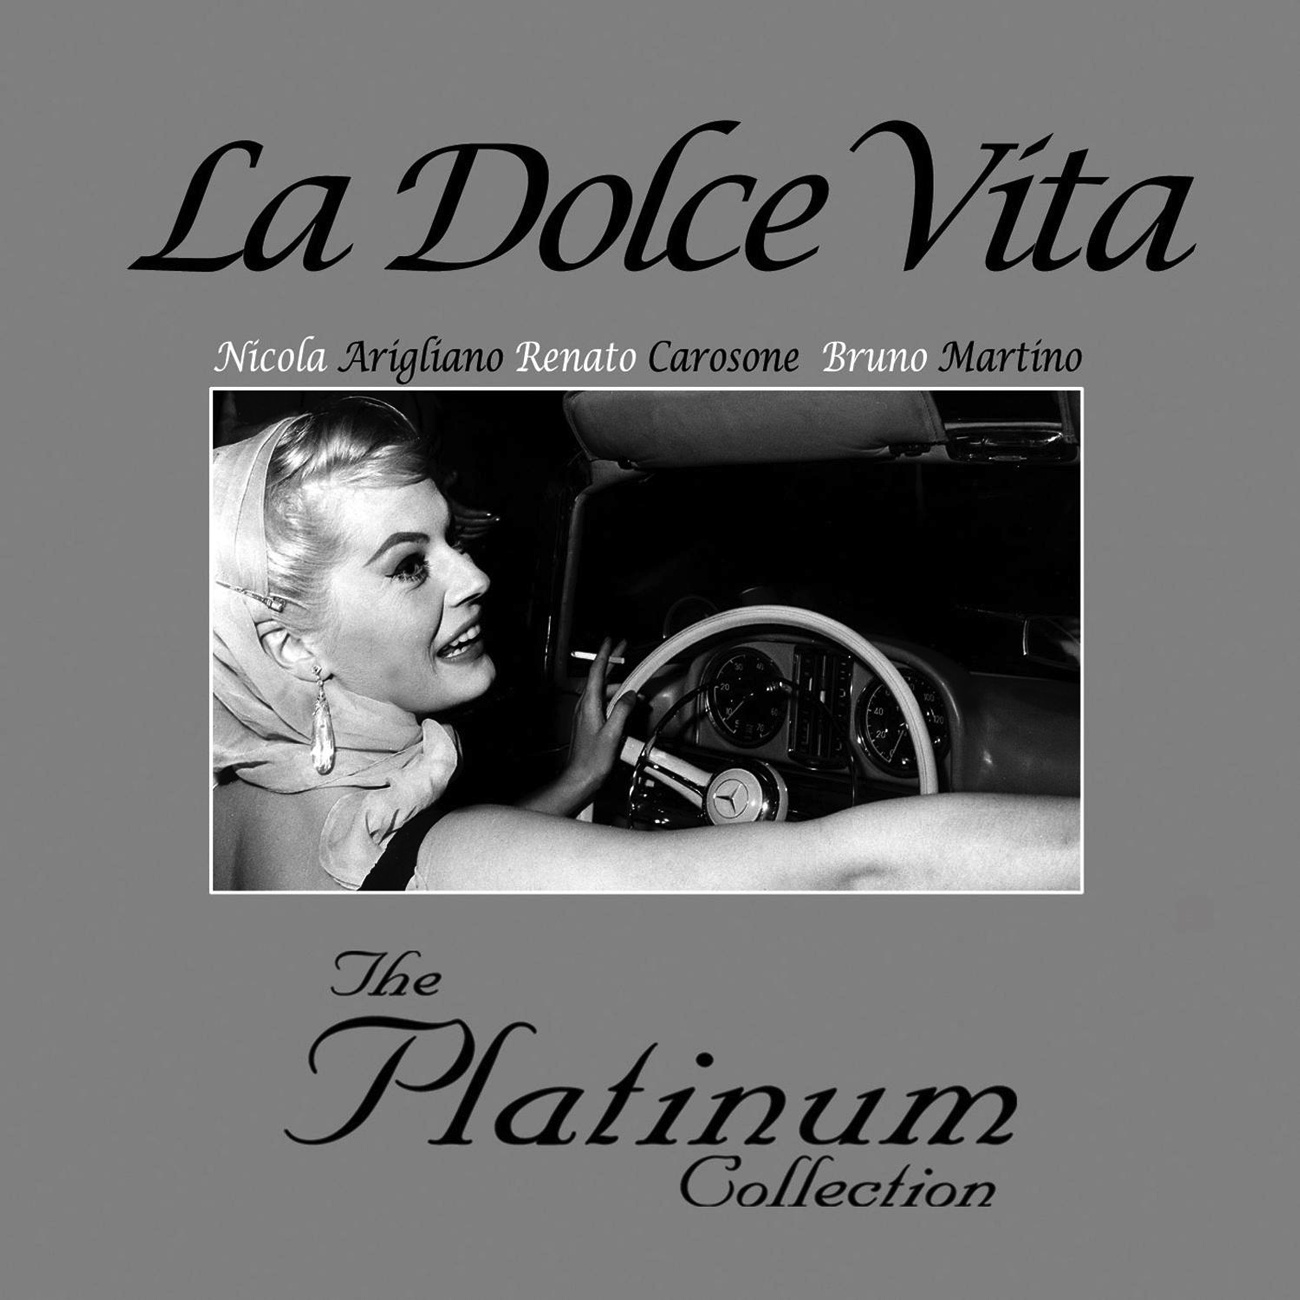 La Dolce Vita Platinum Collection